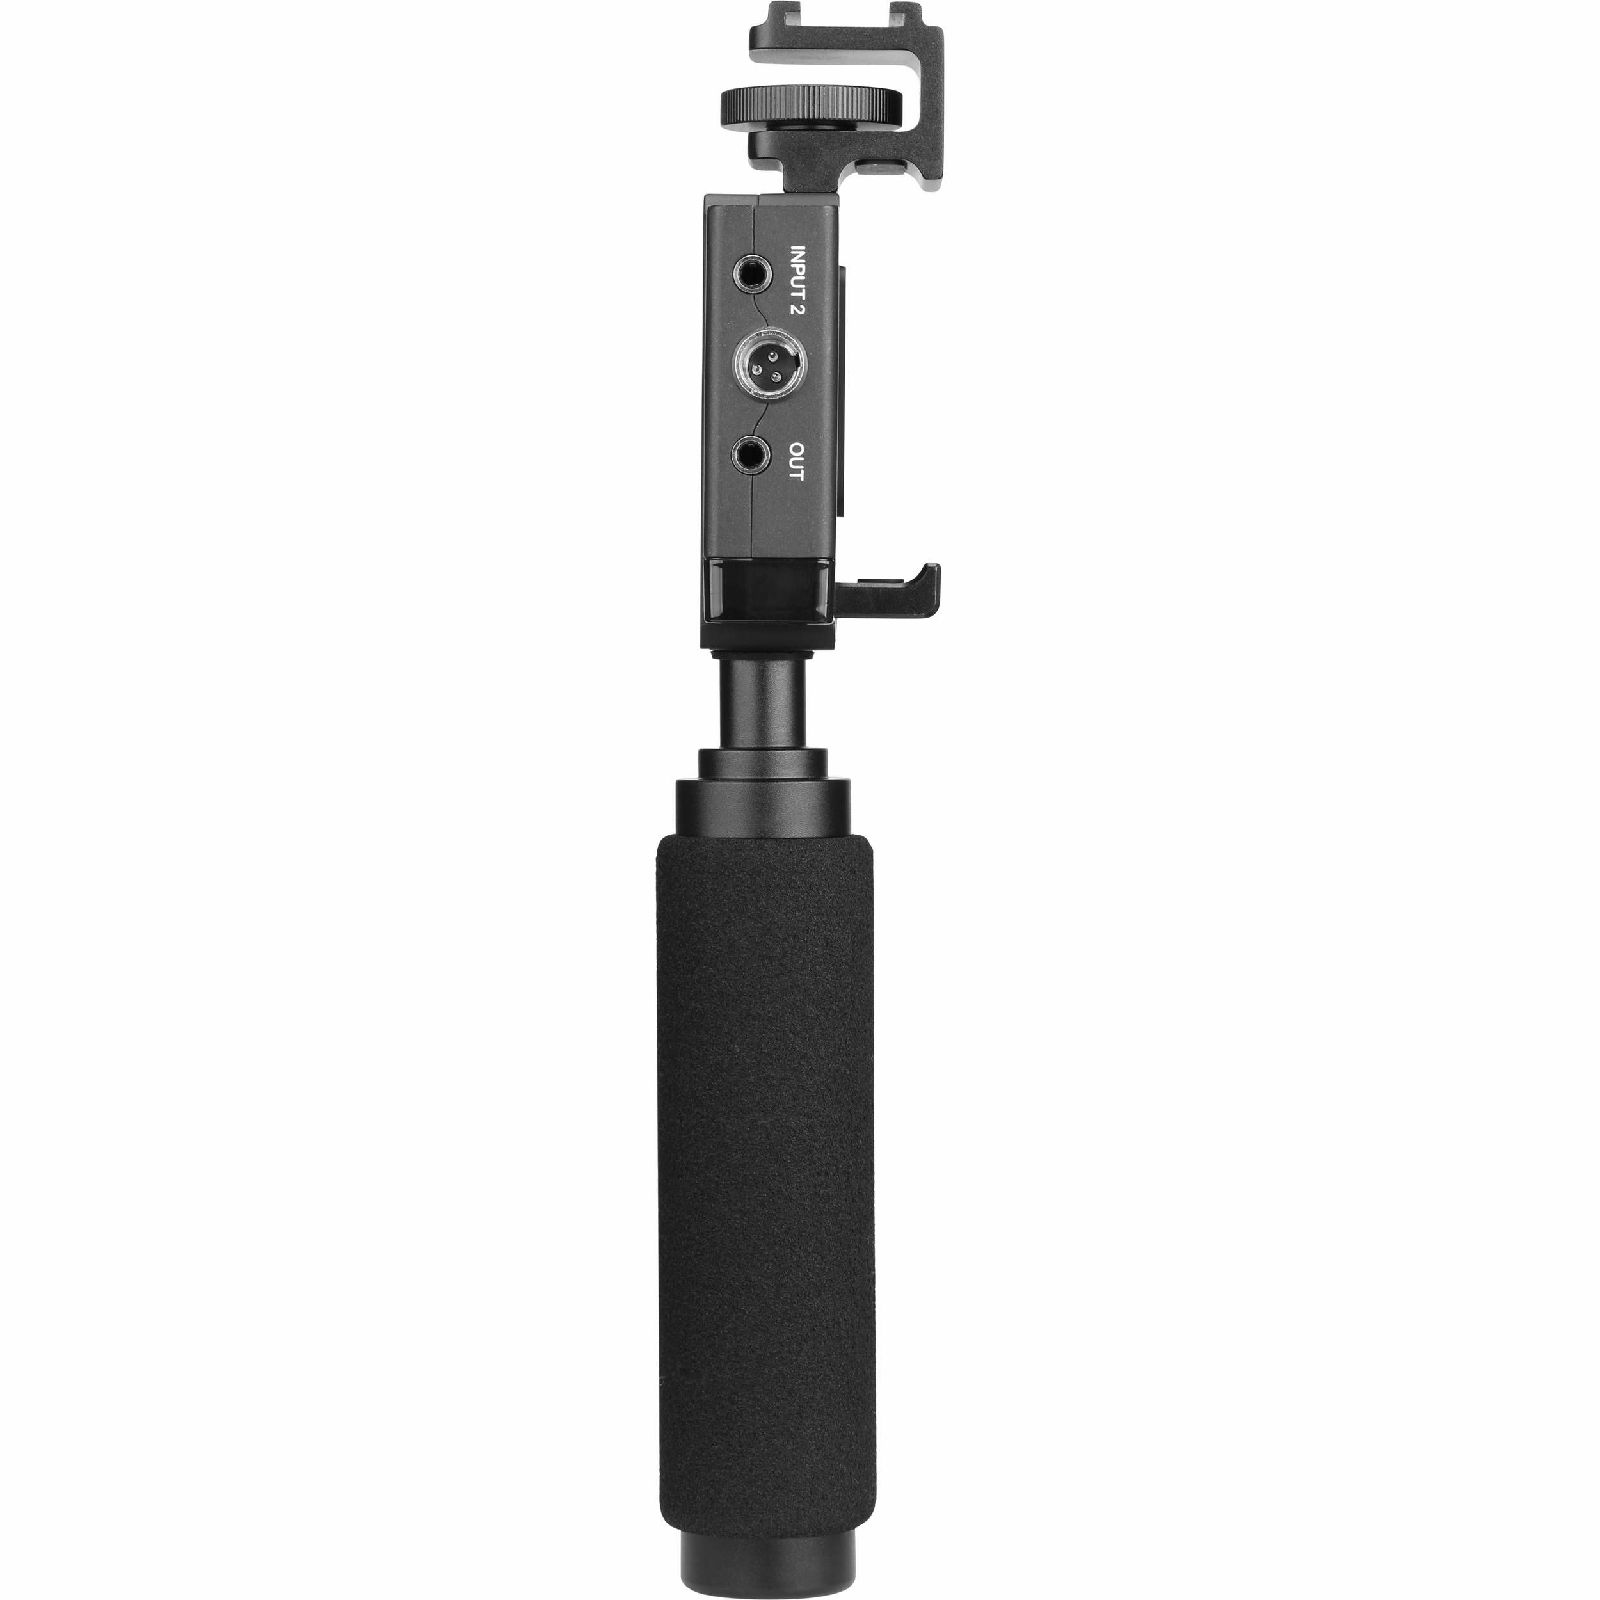 Saramonic UwMic9 SP-RX9 Compact two-channel wireless receiver and audio mixer kompaktni bežični prijemnik i audio mikser za iOS, Android smartphone mobitele, fotoaparate